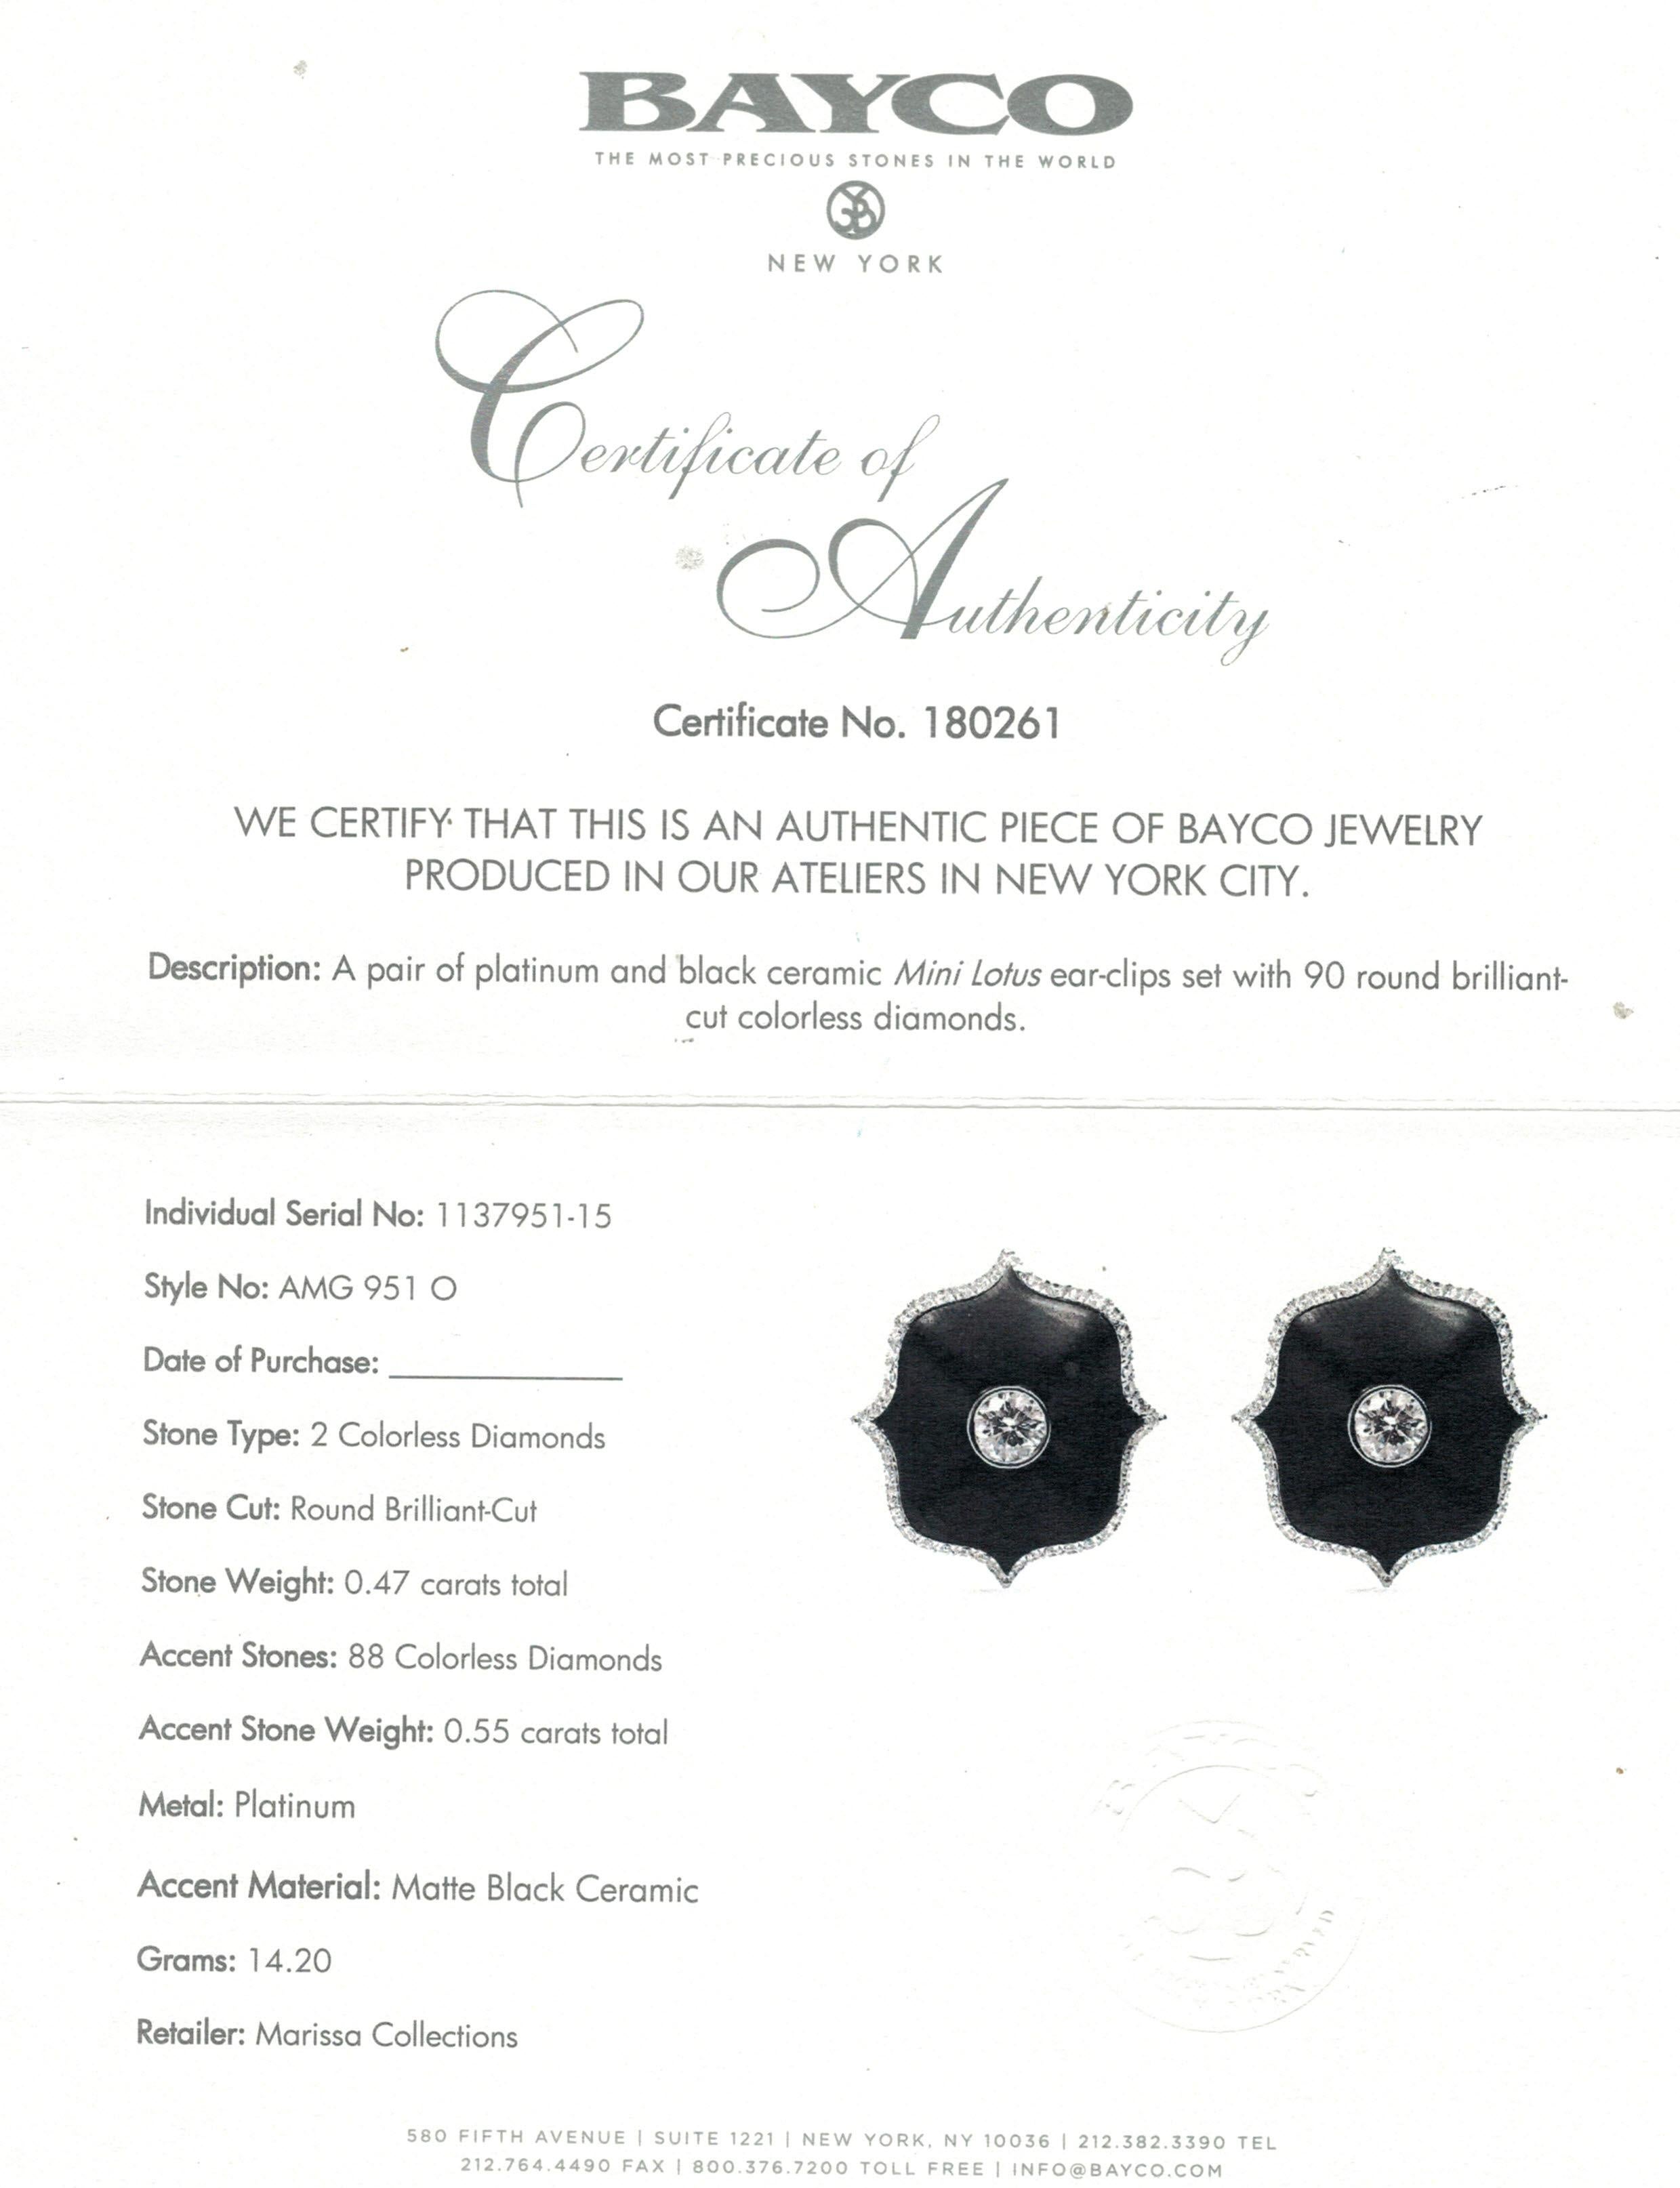 Brilliant Cut Bayco Ceramic Mini Lotus Diamond Earrings For Sale